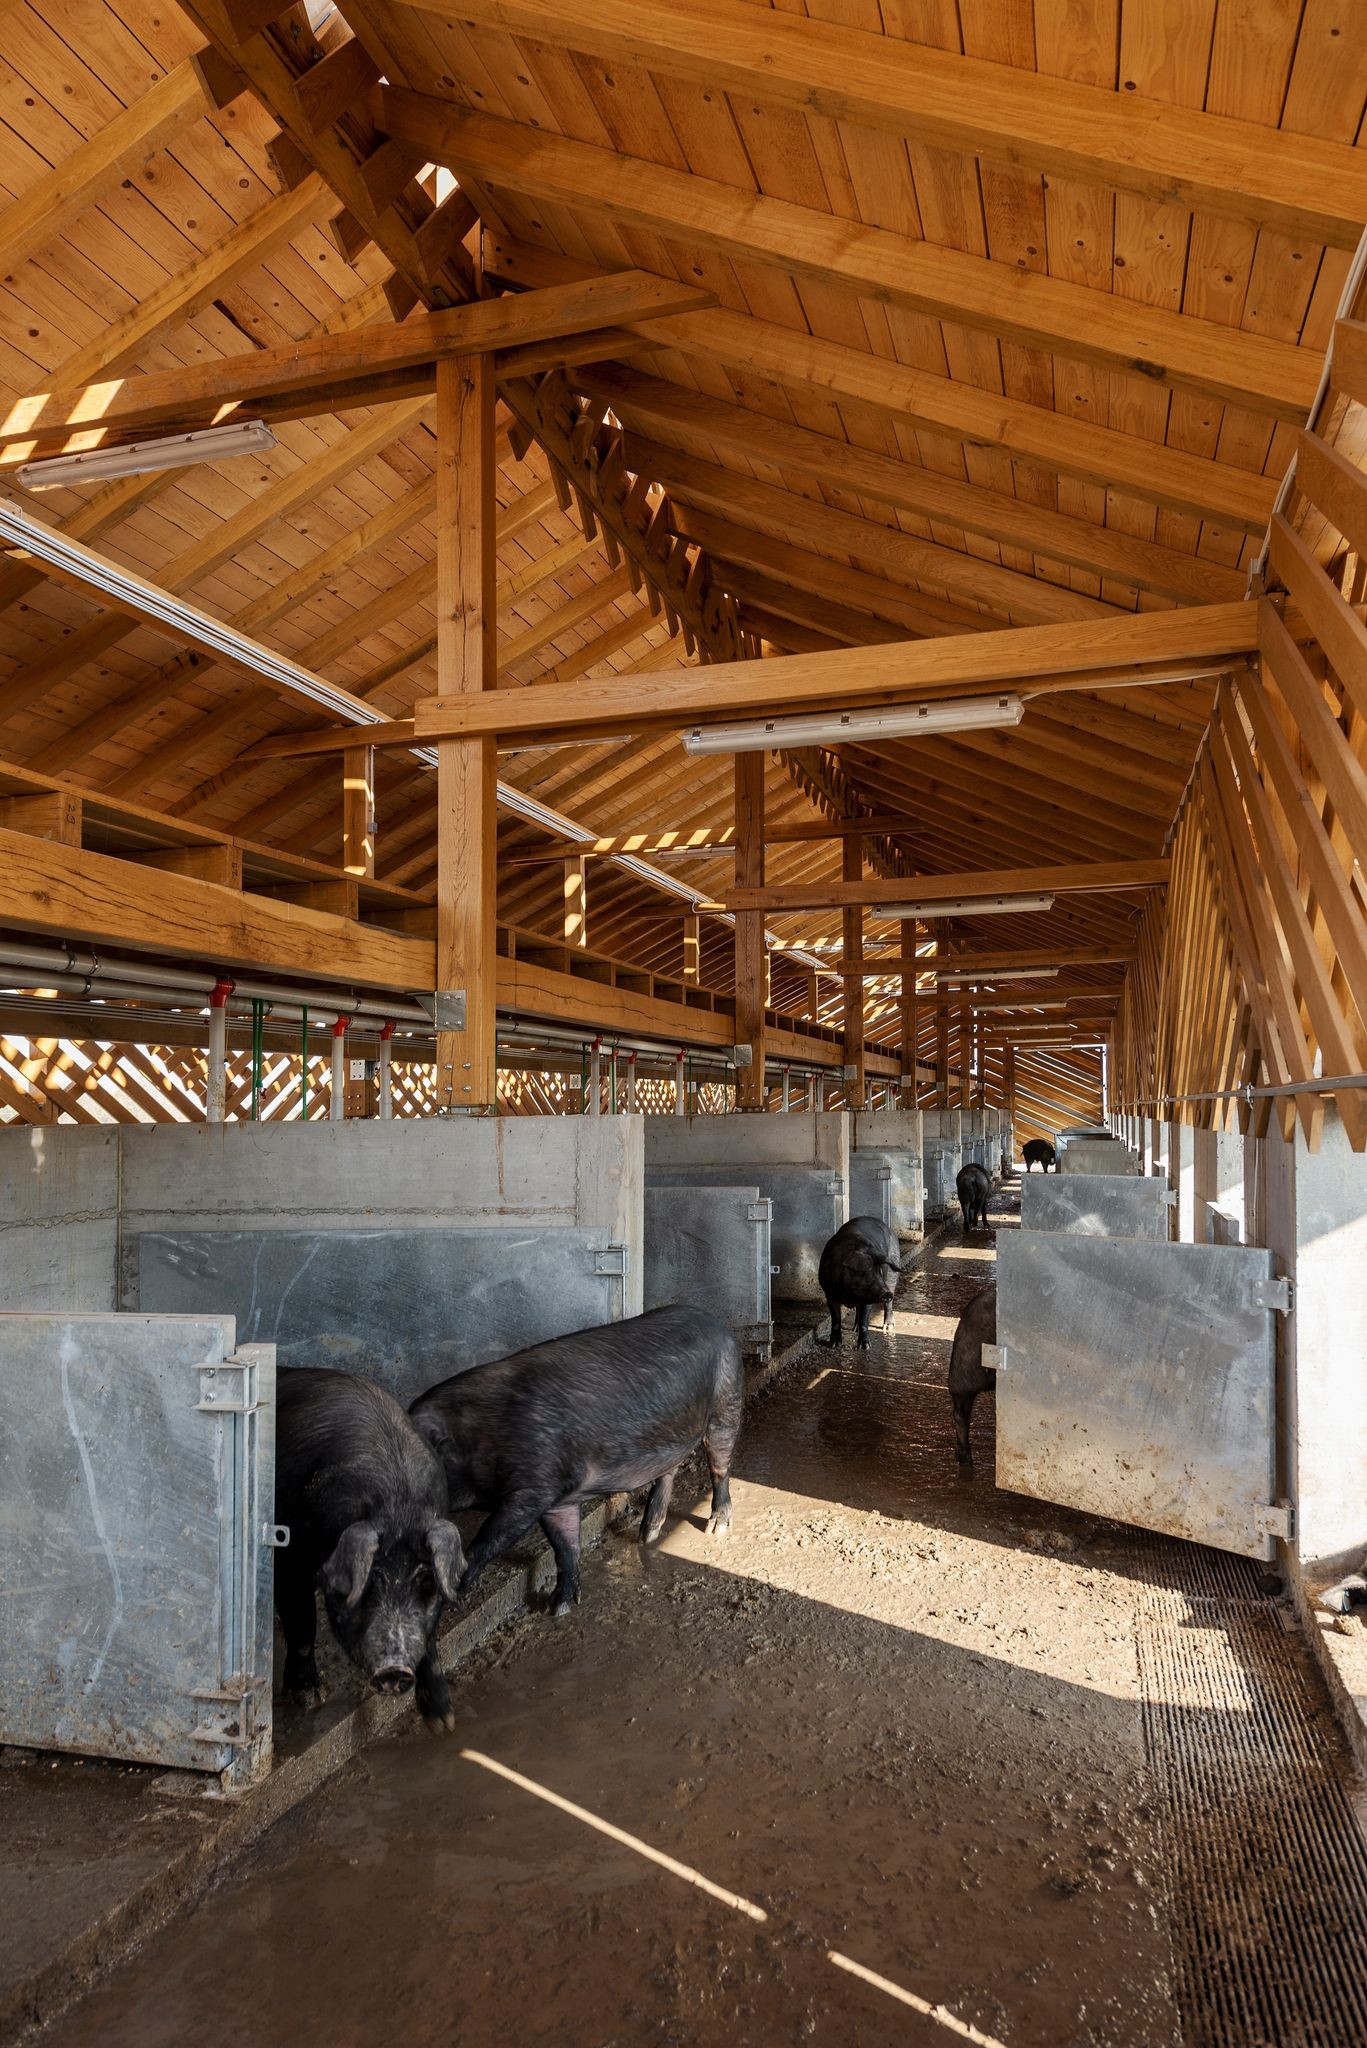 Fazenda de porcos de Domagoj Vida, zagueiro croata — Foto: Bosnic+Dorotic